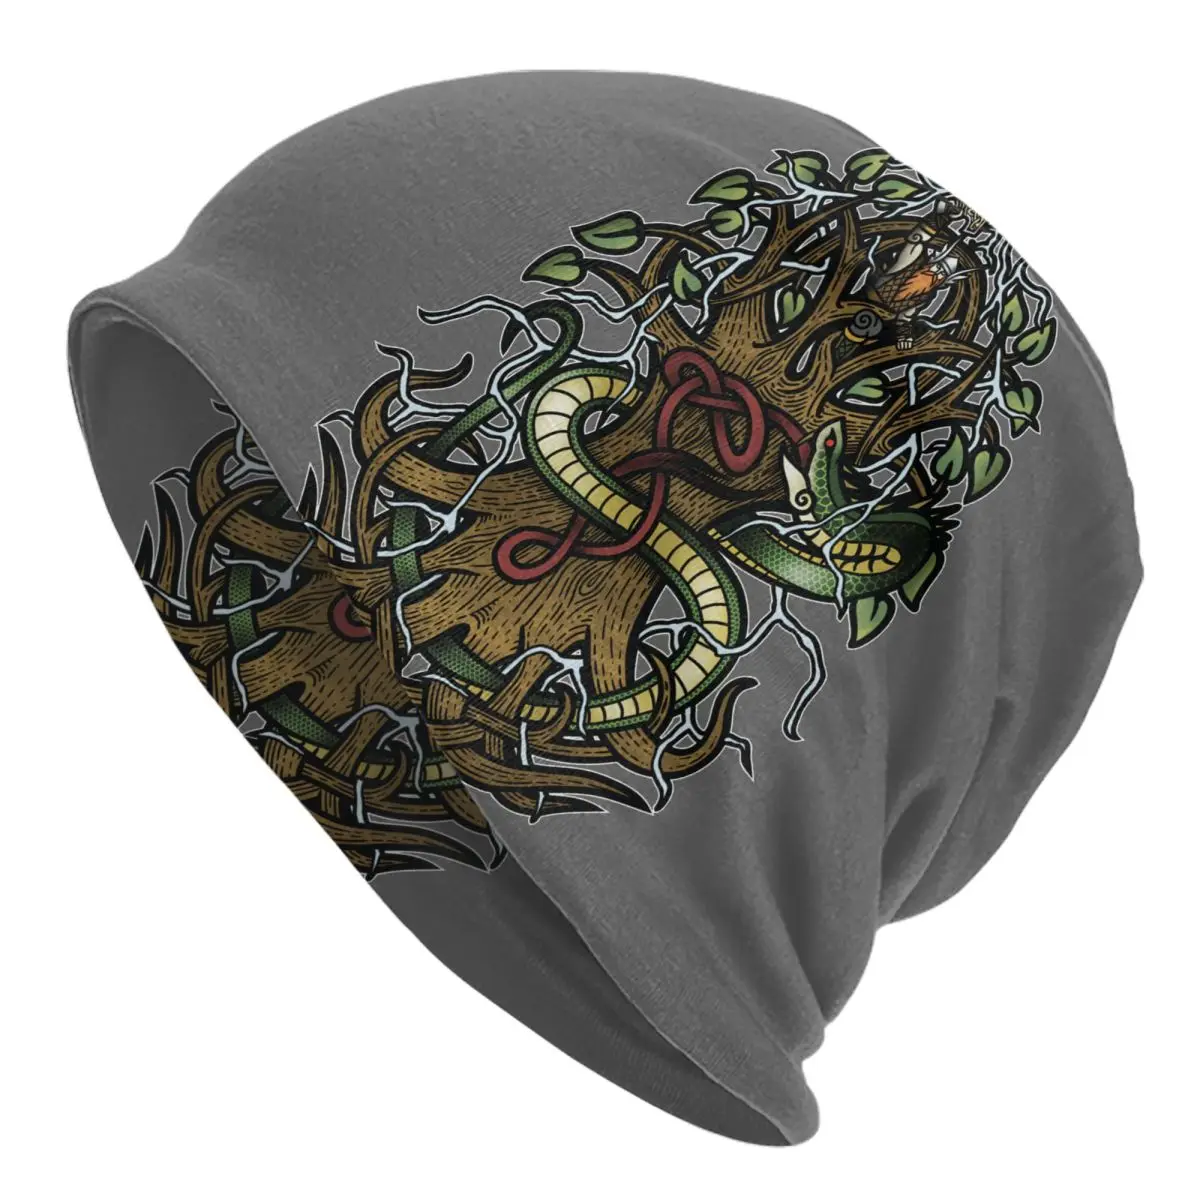 Yggdrasil Ragnarok Caps Men Women Unisex Streetwear Winter Warm Knit Hat Adult funny Hats